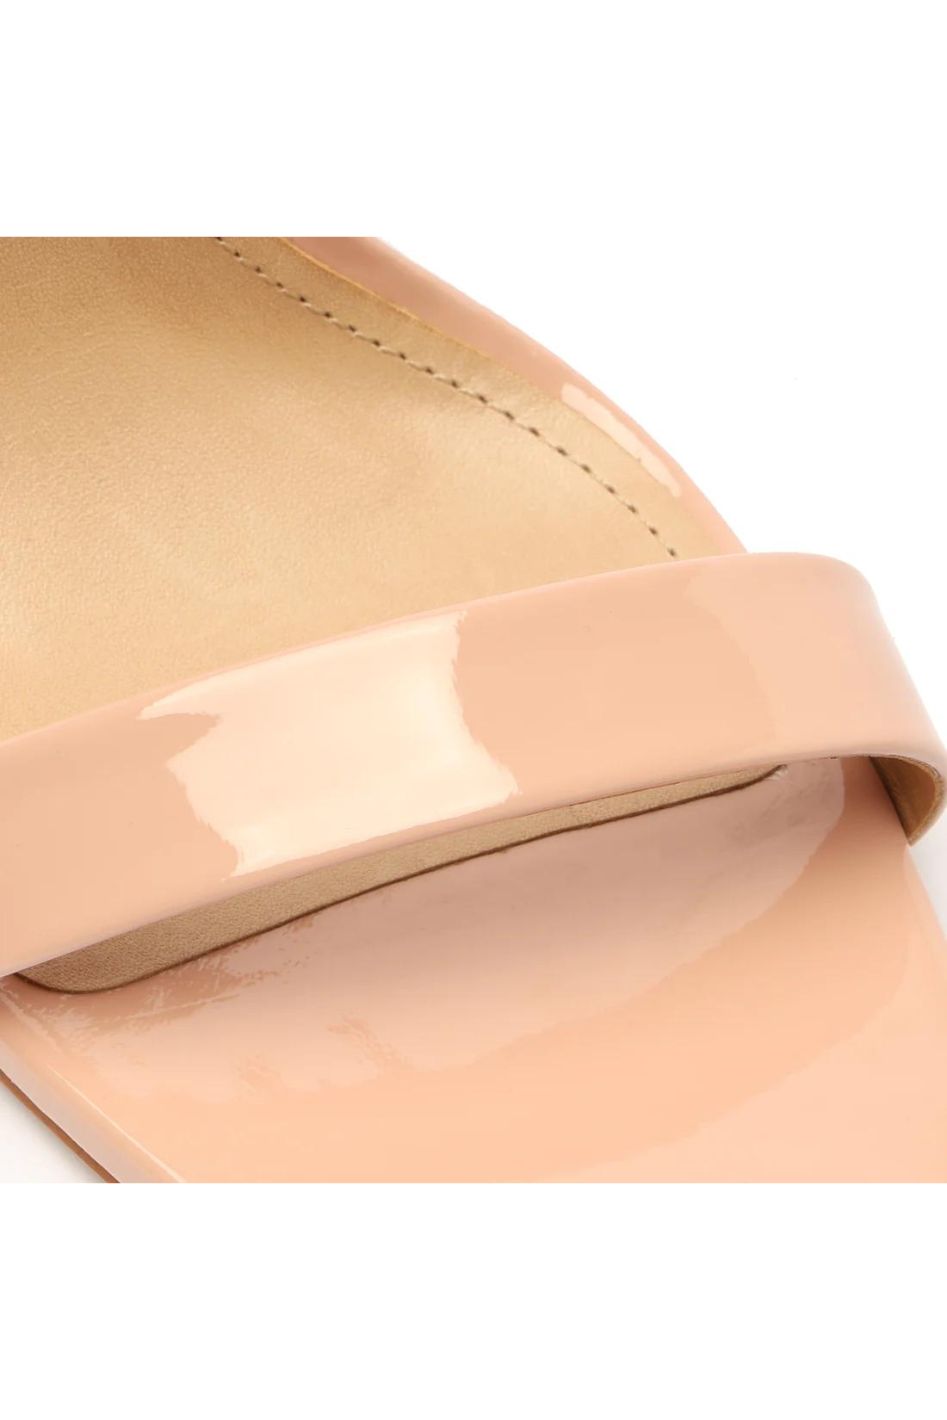 Filipa Patent Leather Sandal - Expressive Collective CO.